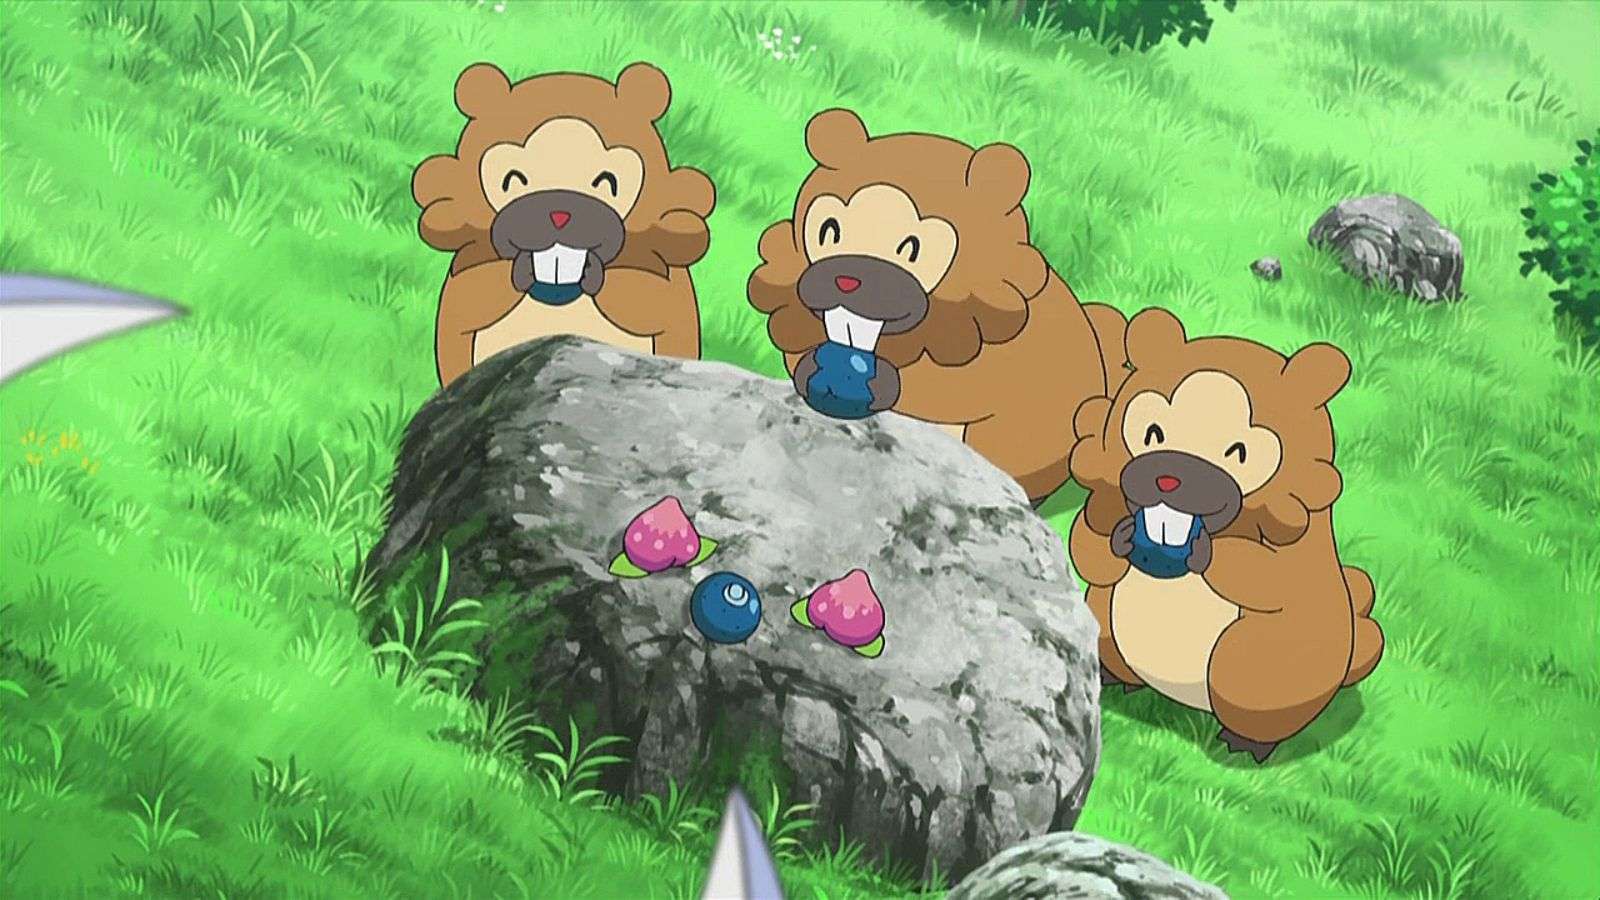 Group of Bidoof from Pokemon anime.